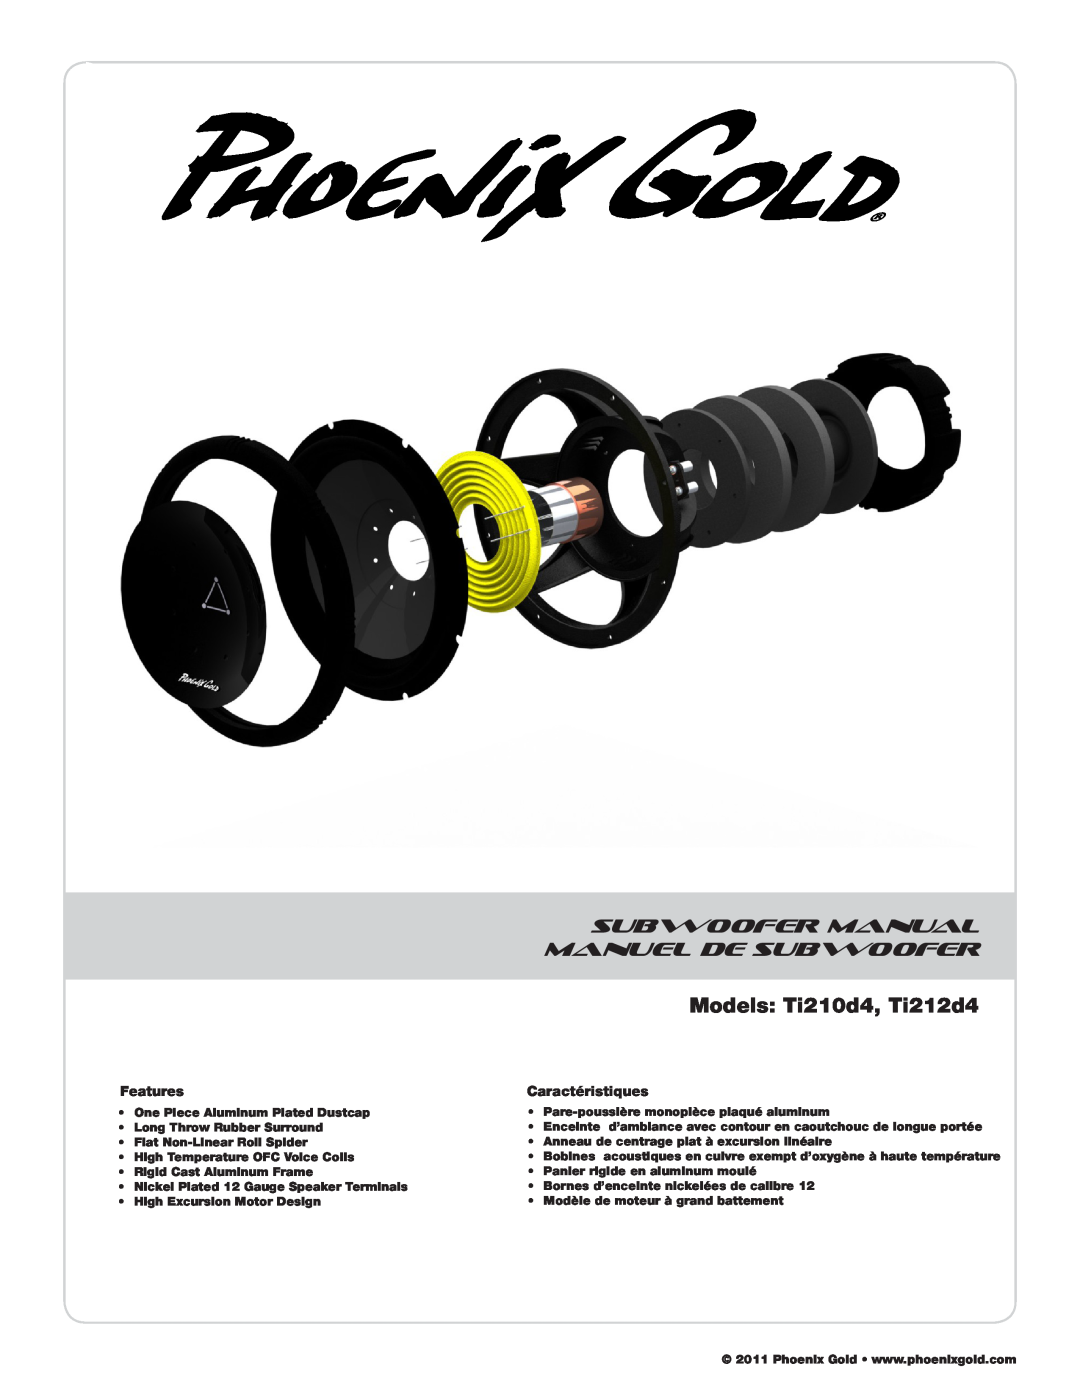 Phoenix Gold TI212D4 manual Subwoofer Manual, Models Ti210d4, Ti212d4, Manuel De Subwoofer, Features, Caractéristiques 